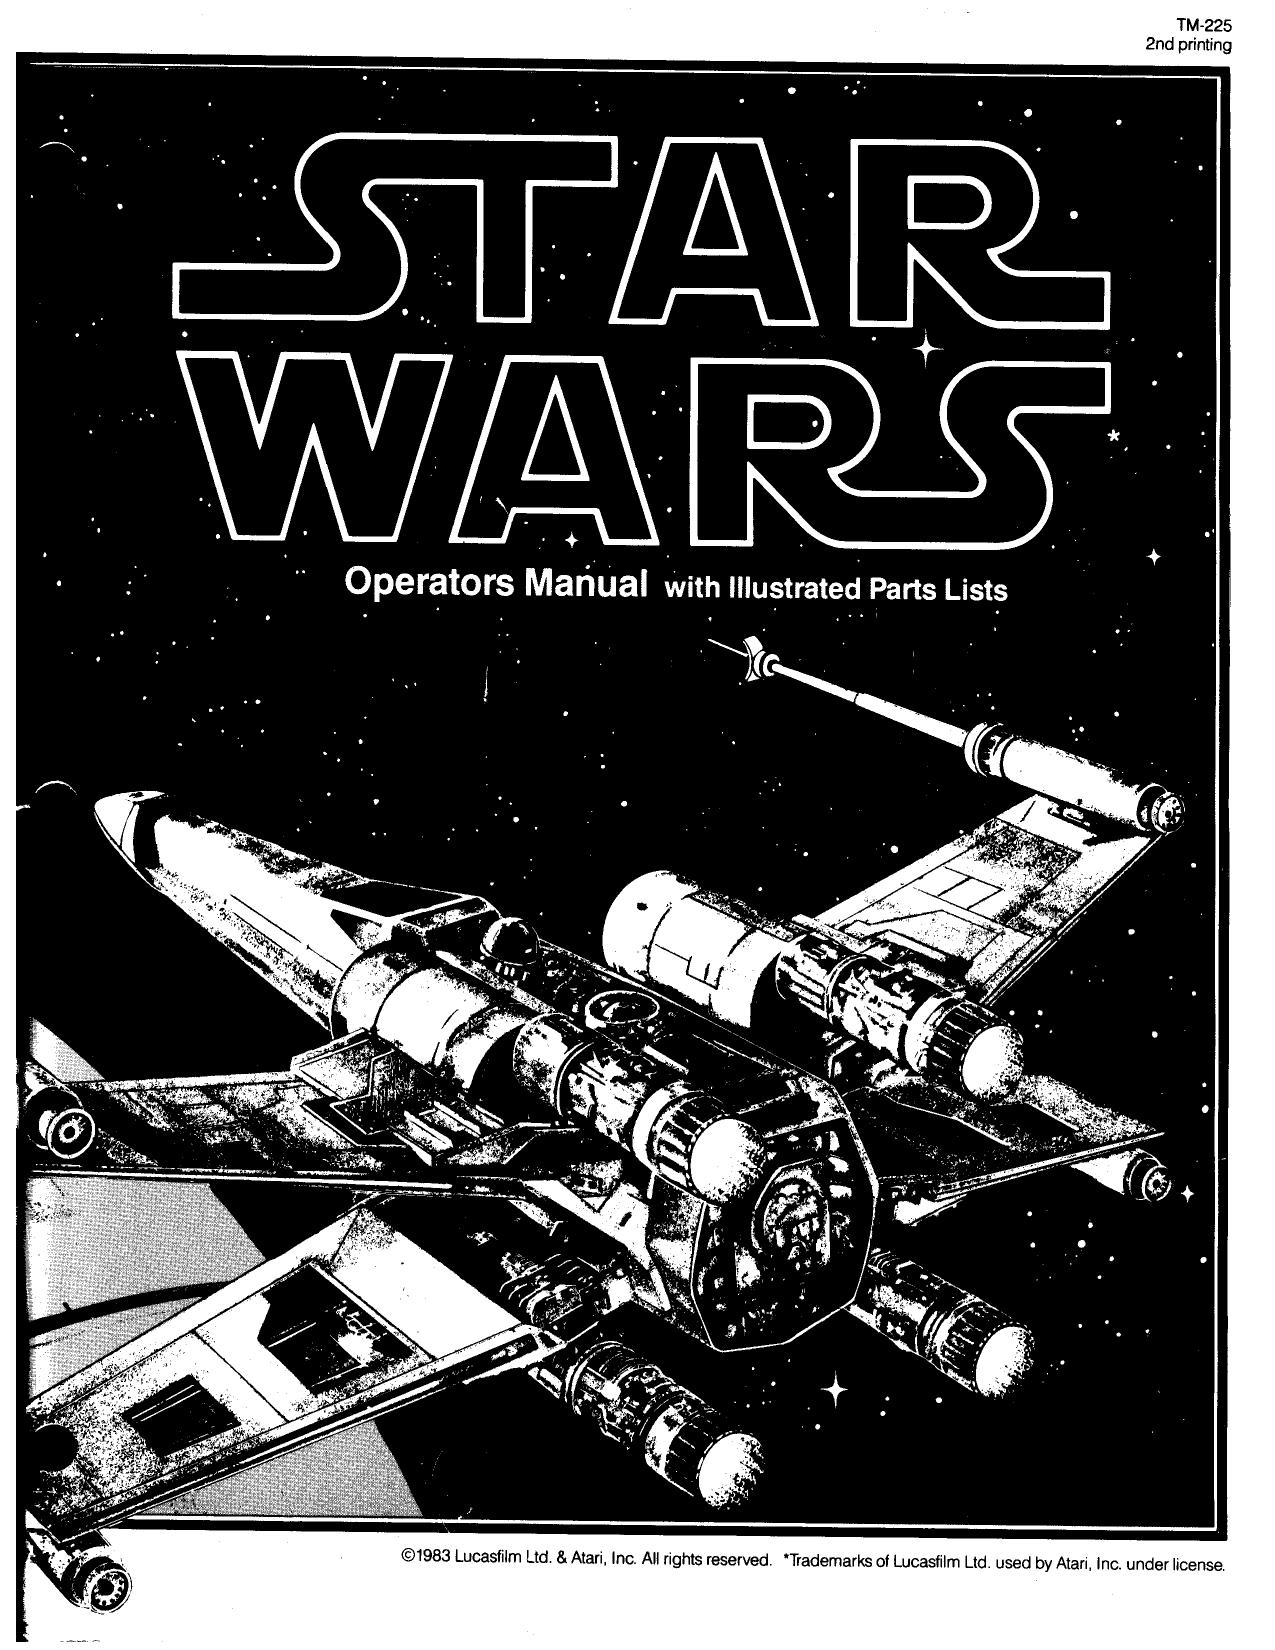 StarWars Manual